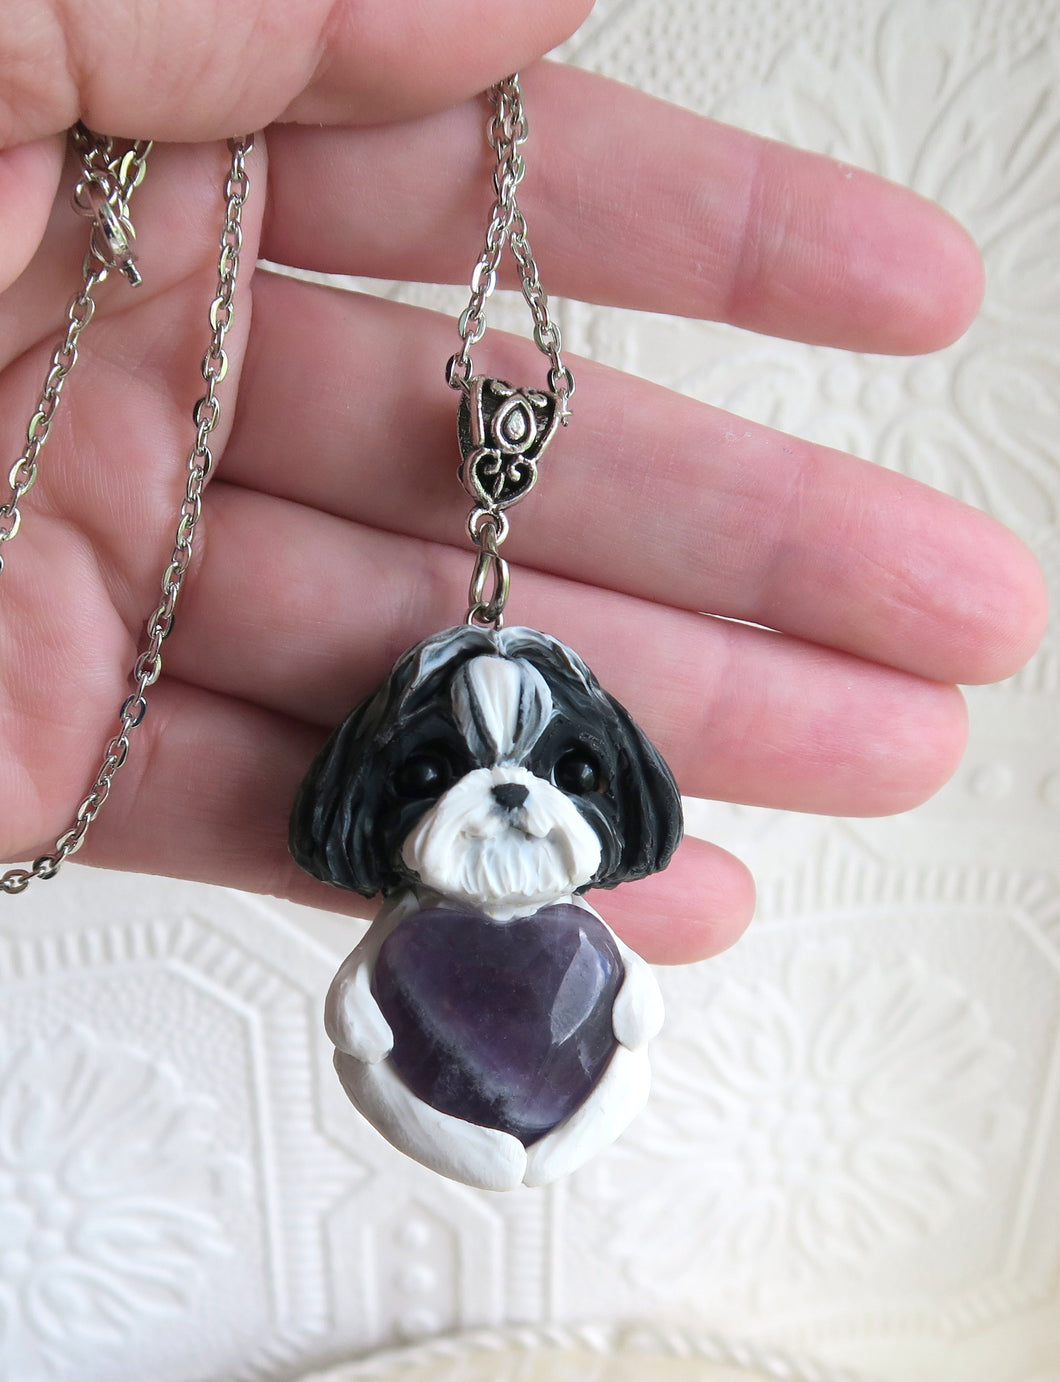 Shih Tzu Love & Healing Purple Aythest heart pendant necklace